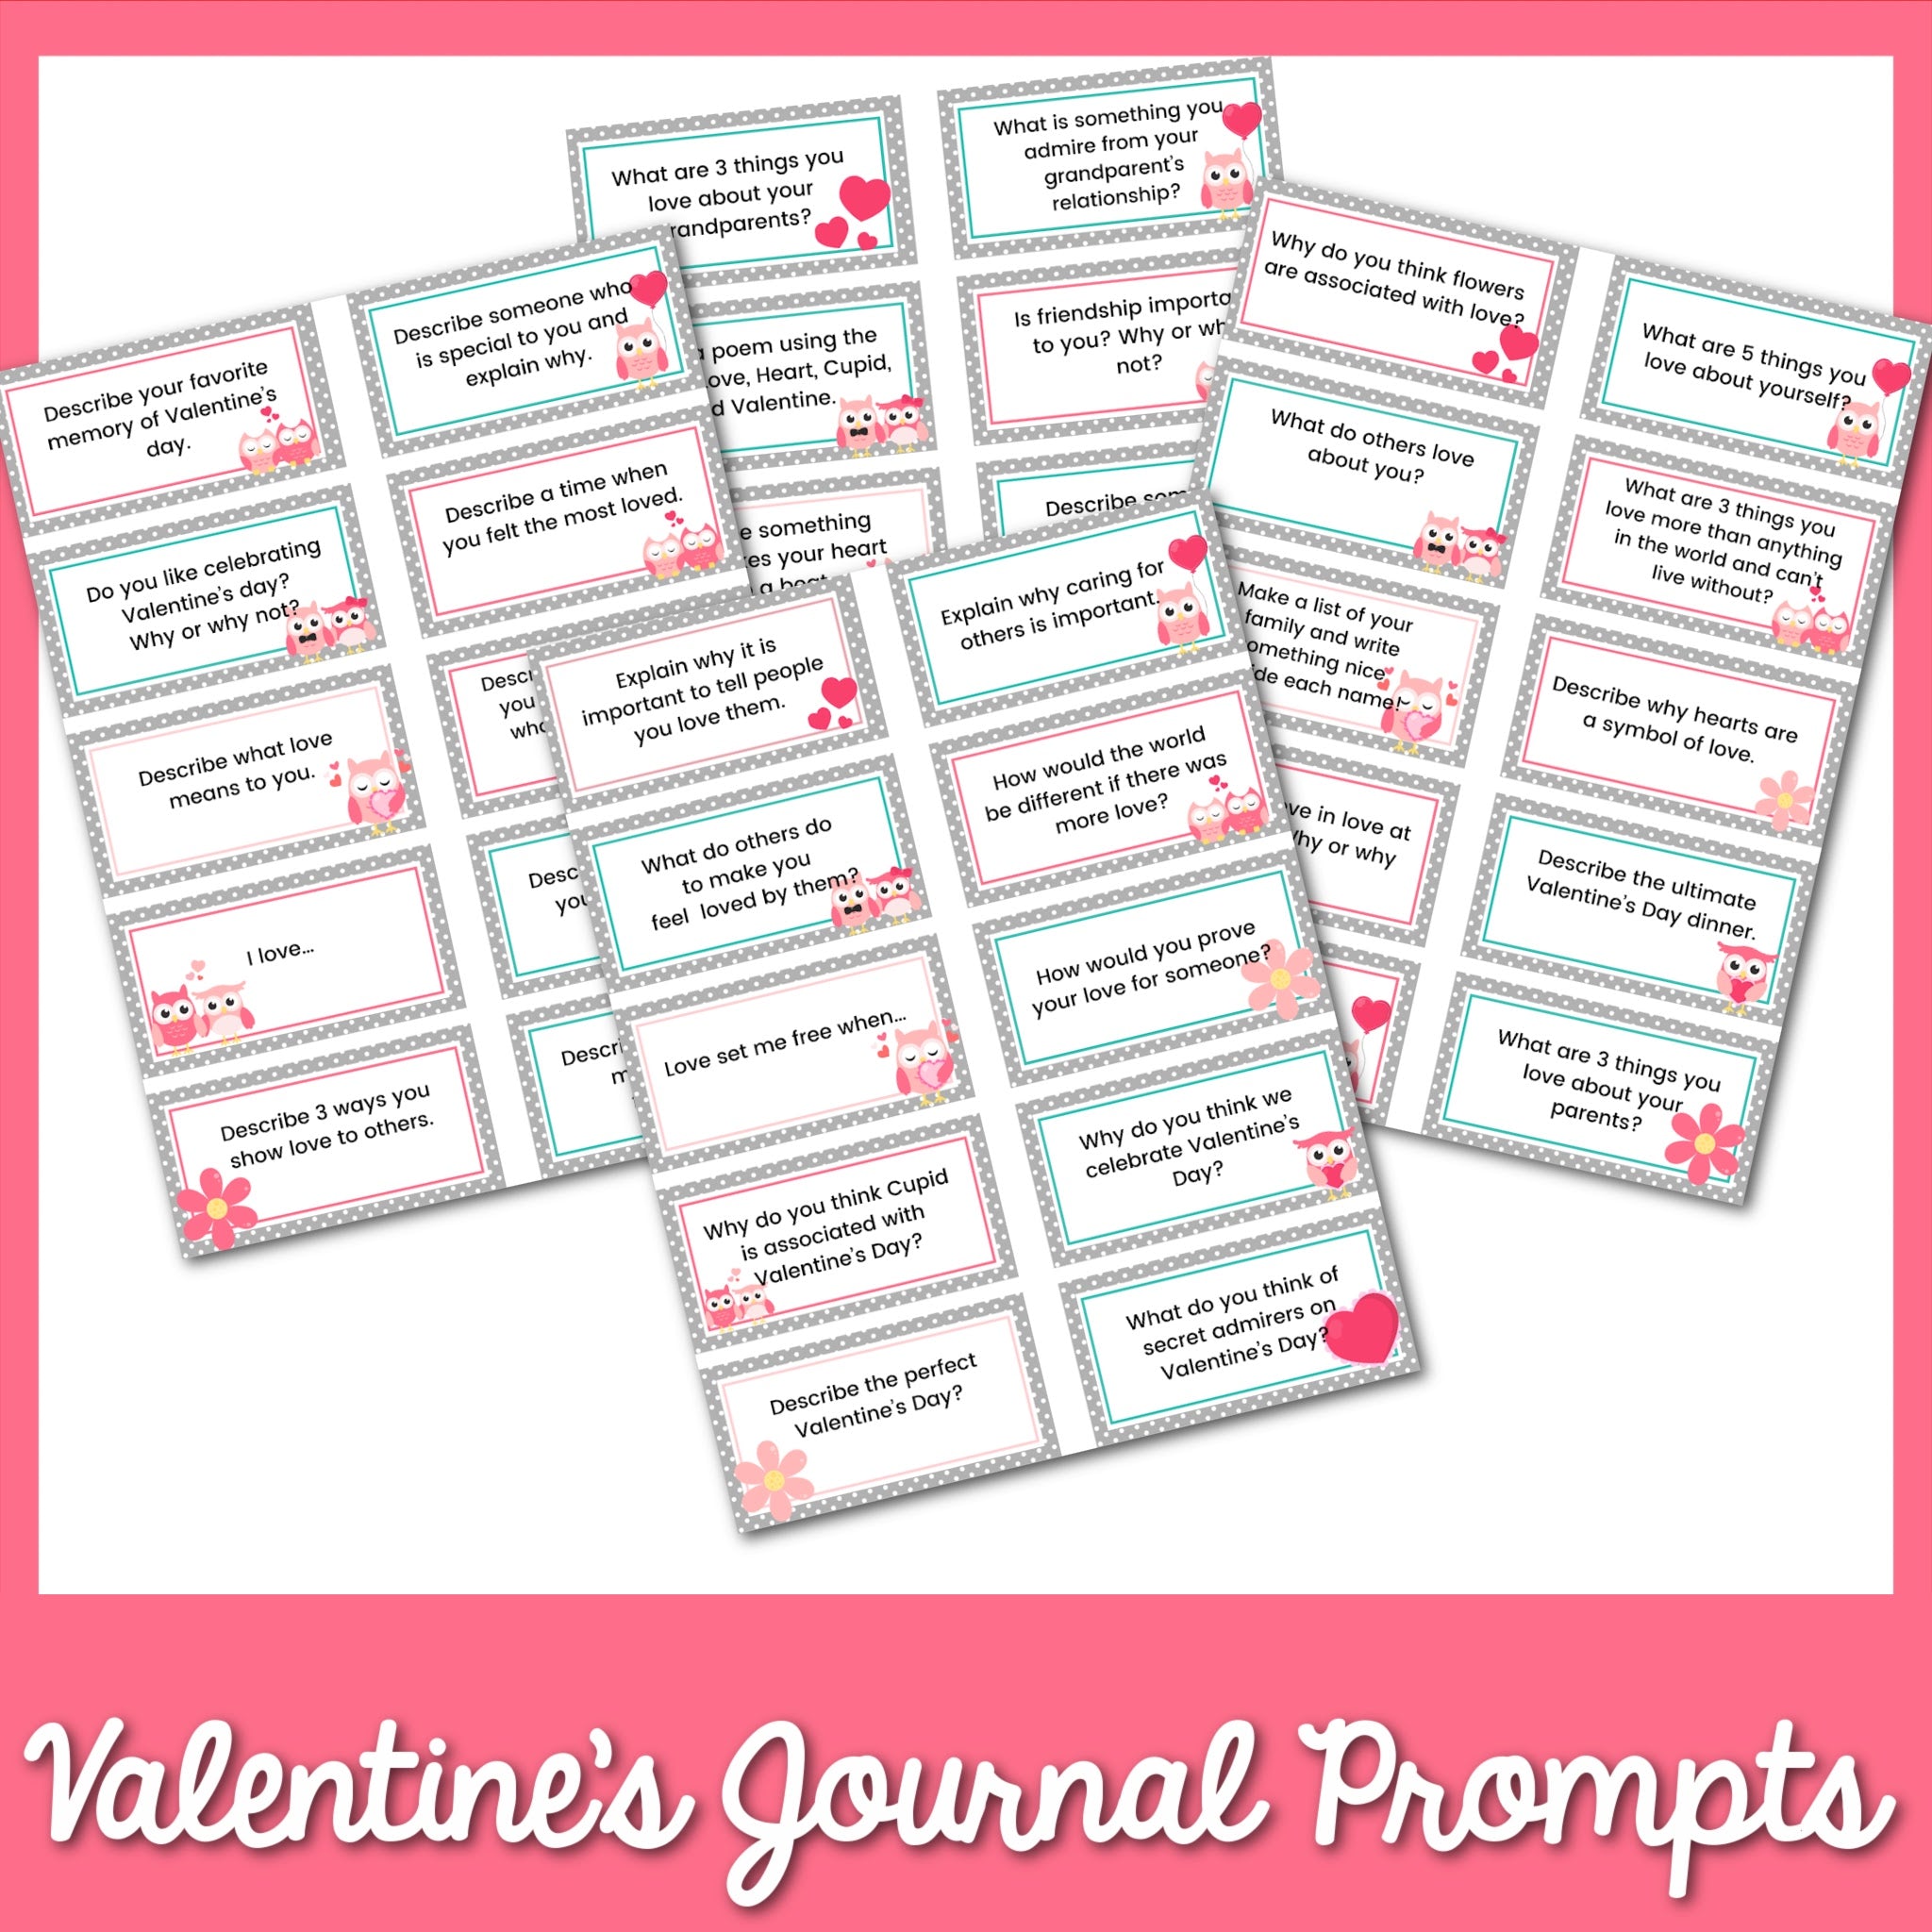 Valentine's Journal Prompts for kids